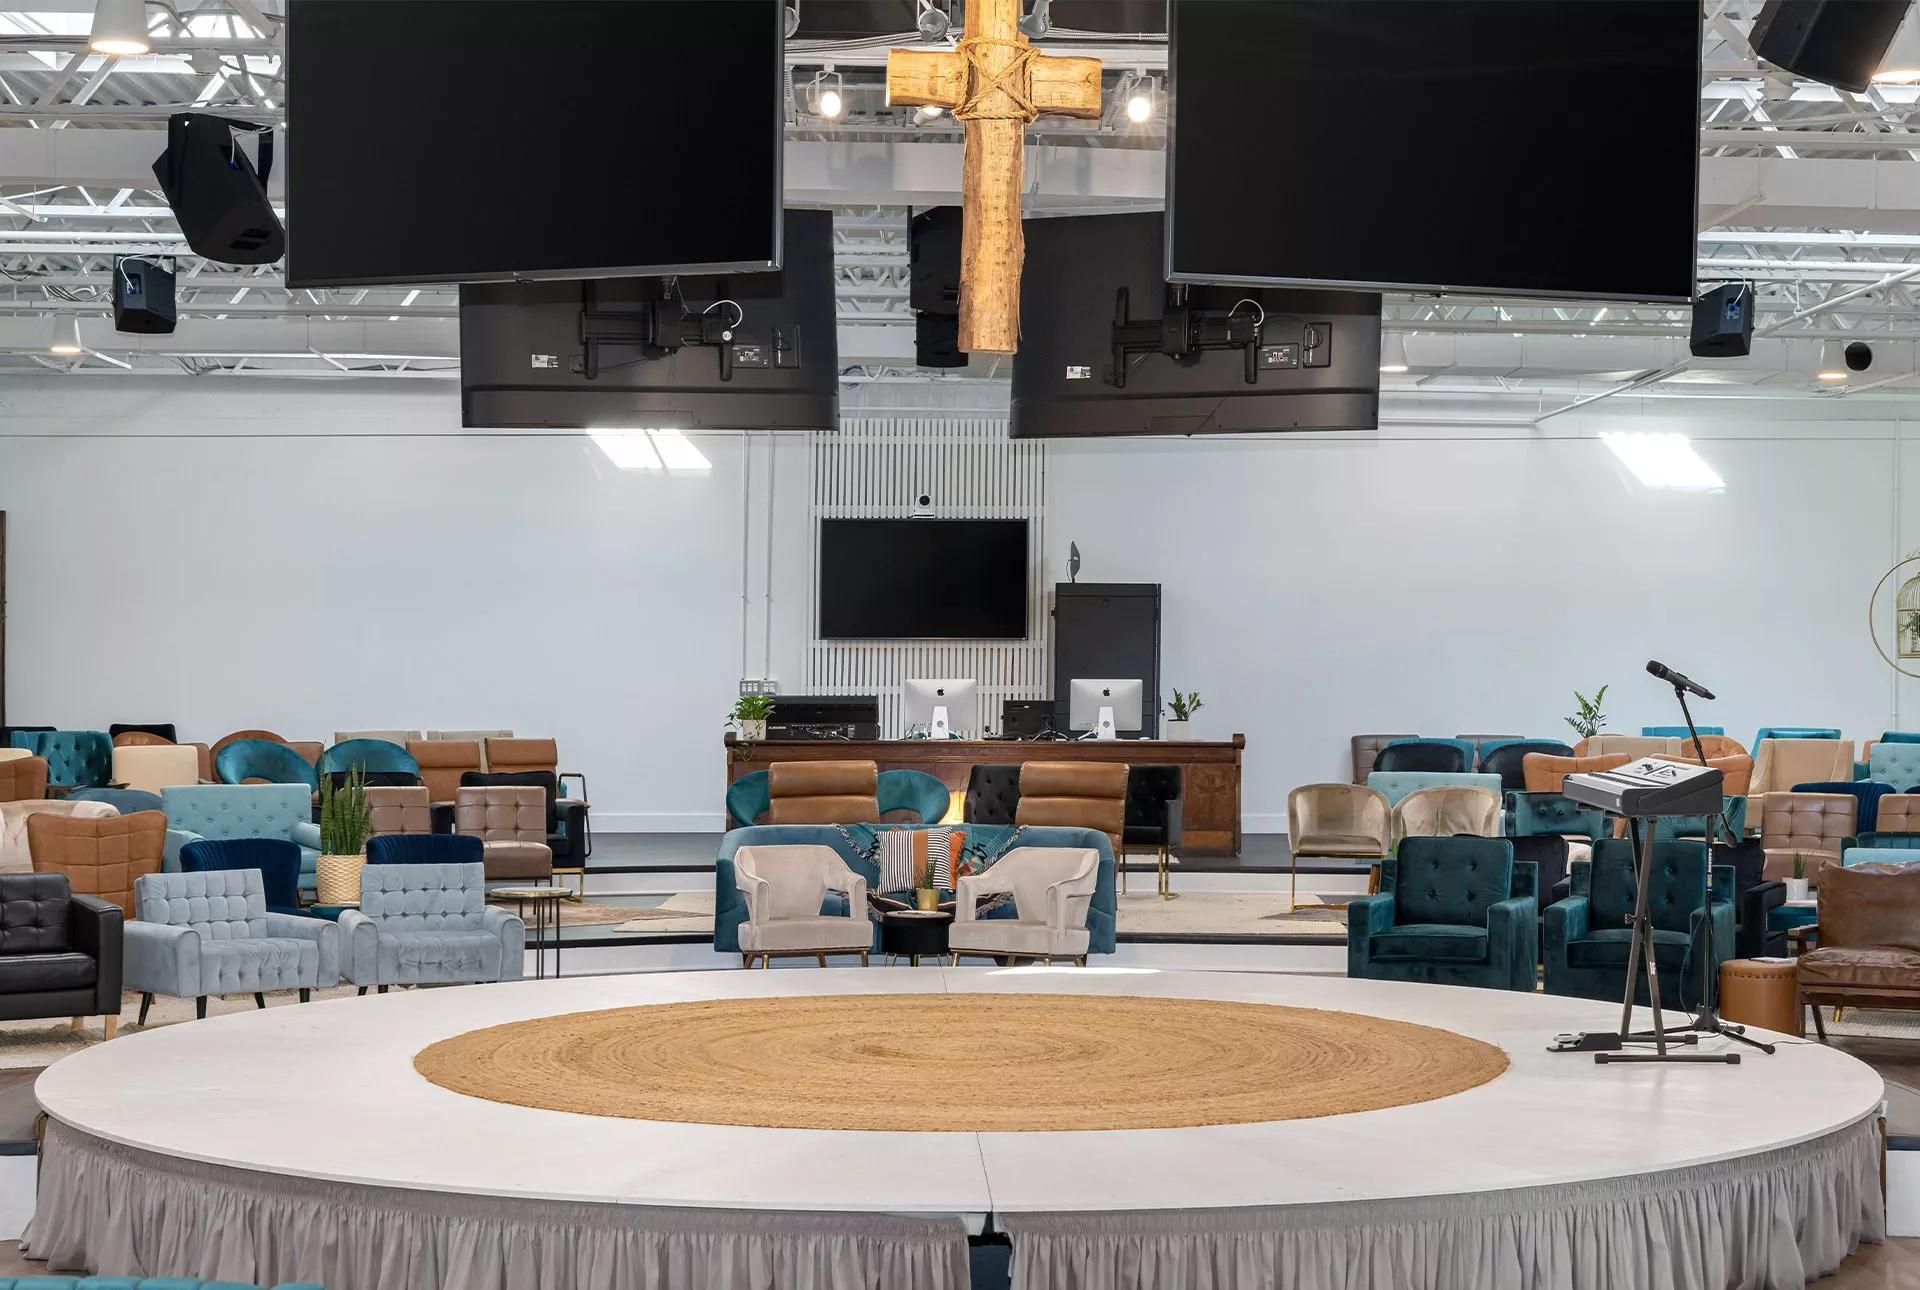 Bose Professional Connect Church sanctuary